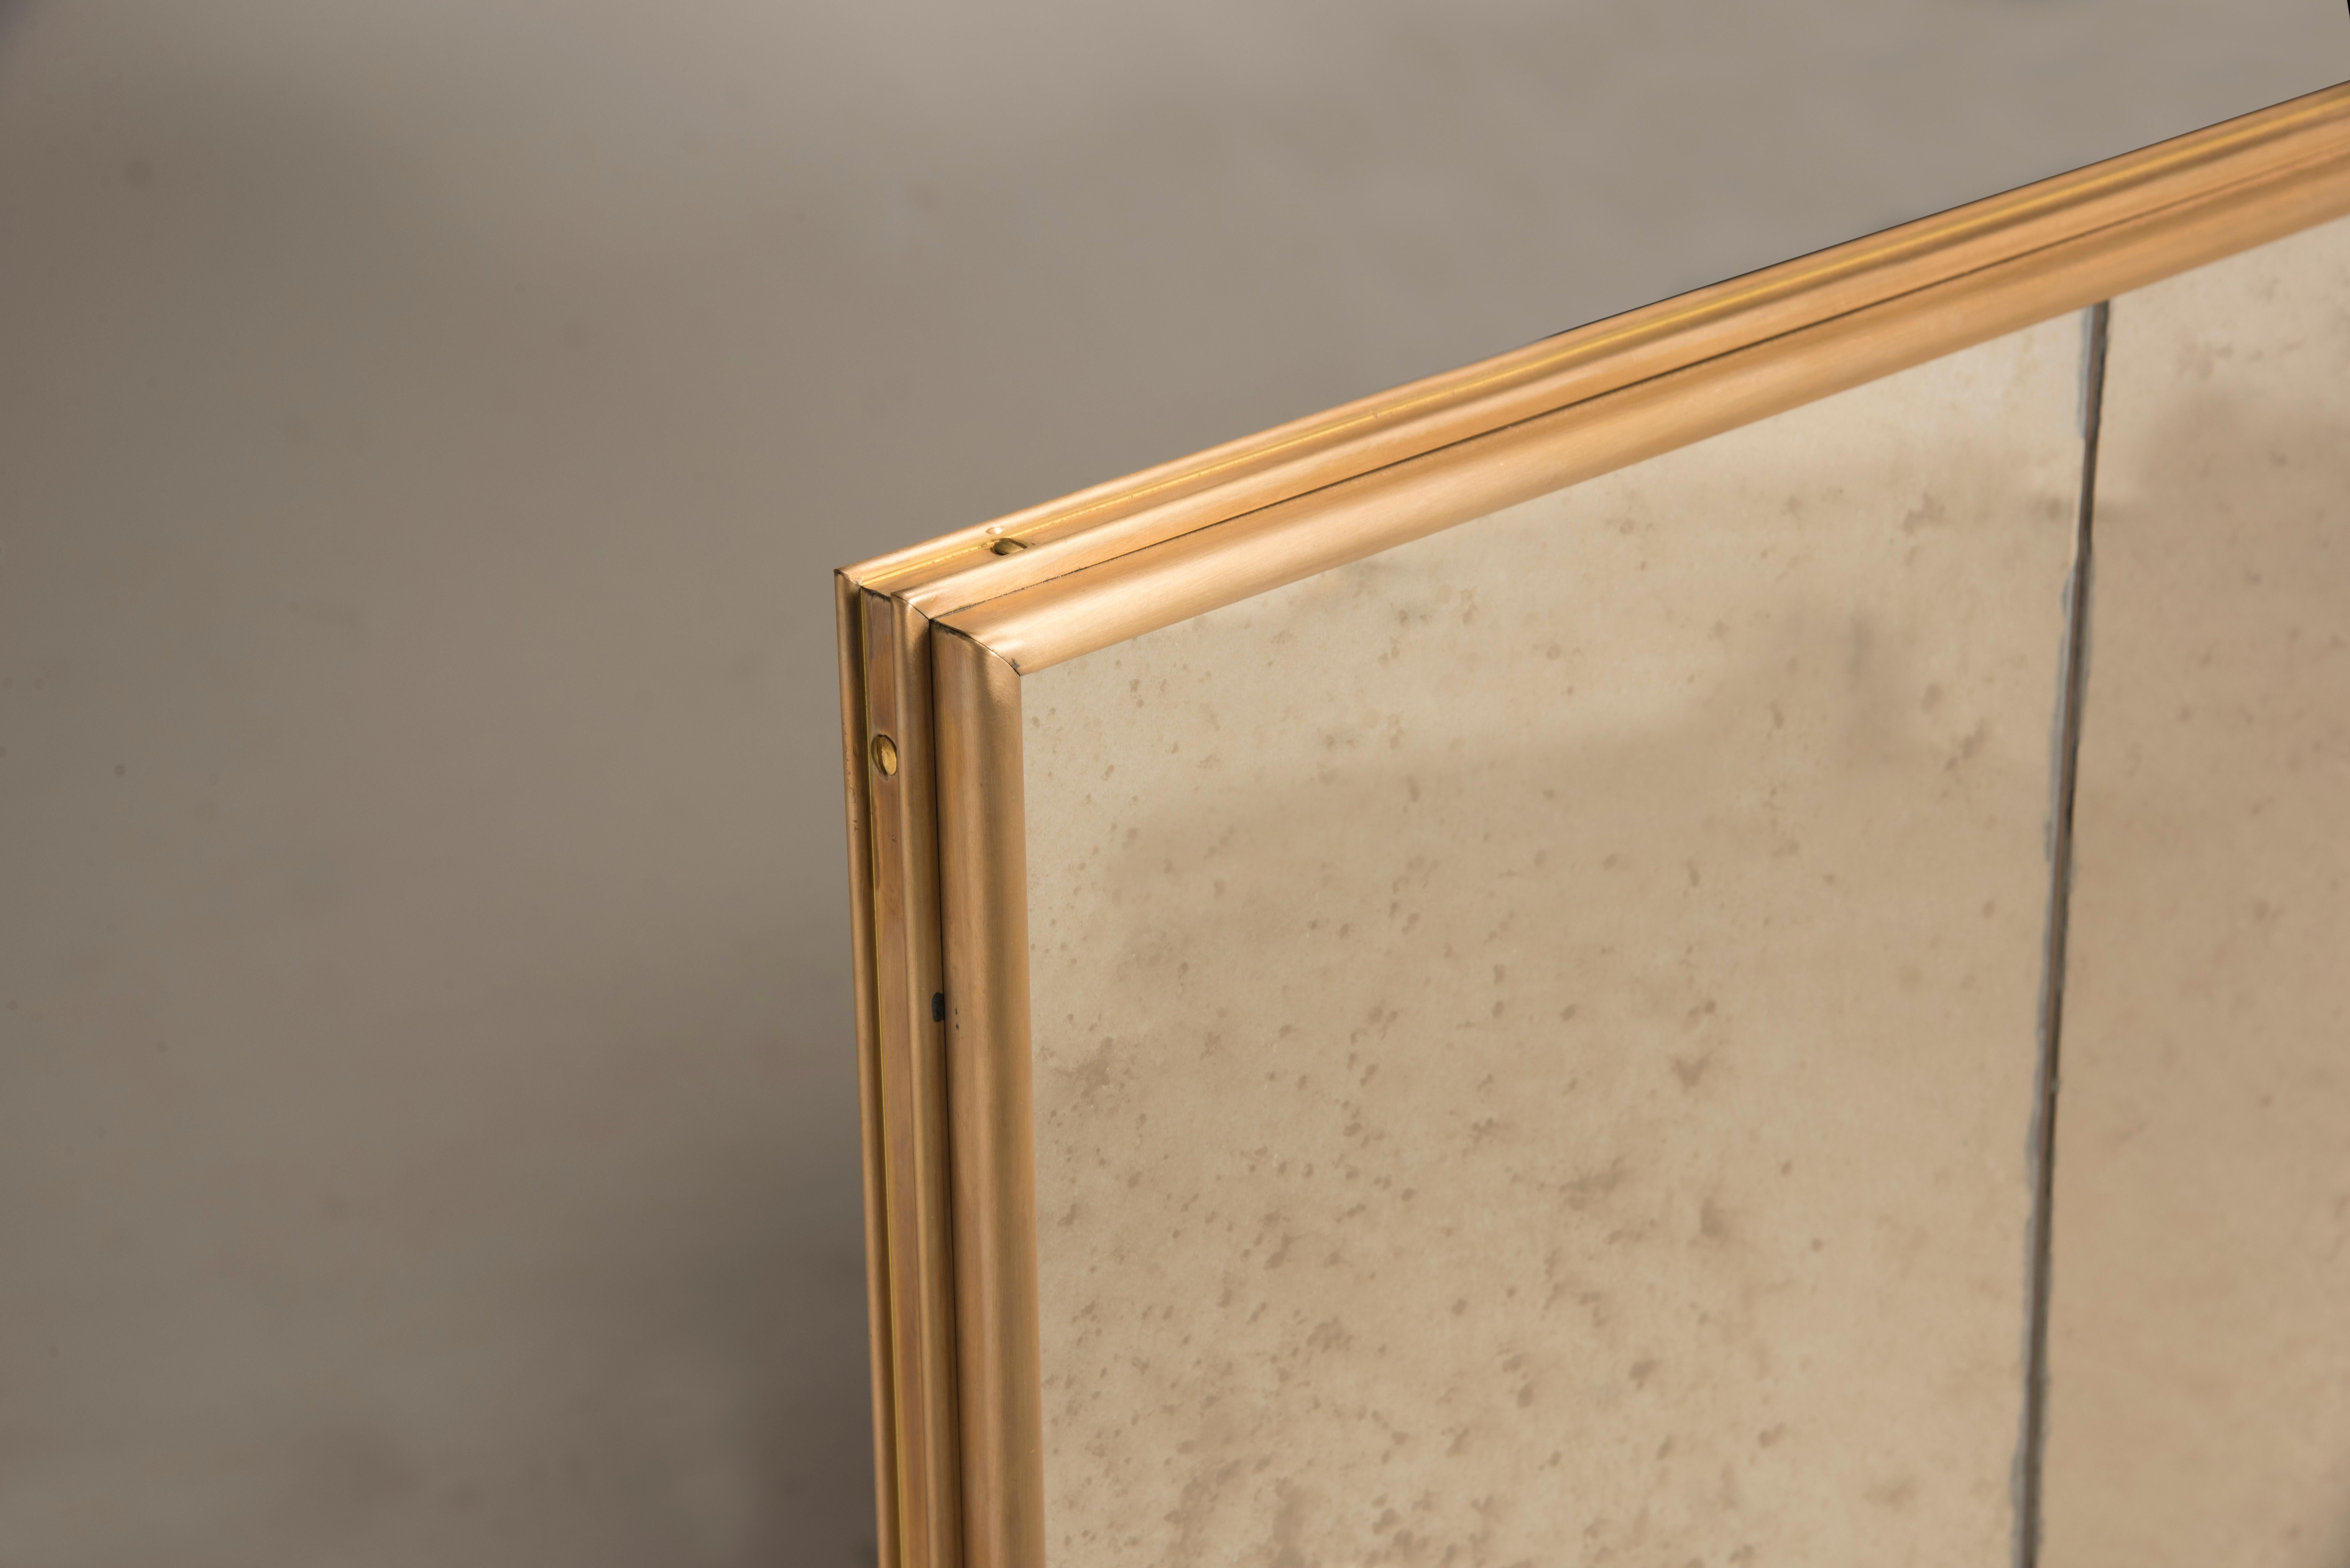 21st Century Rectangular Art Deco Style Paneled Brass Distressed Mirror 80x150  For Sale 7